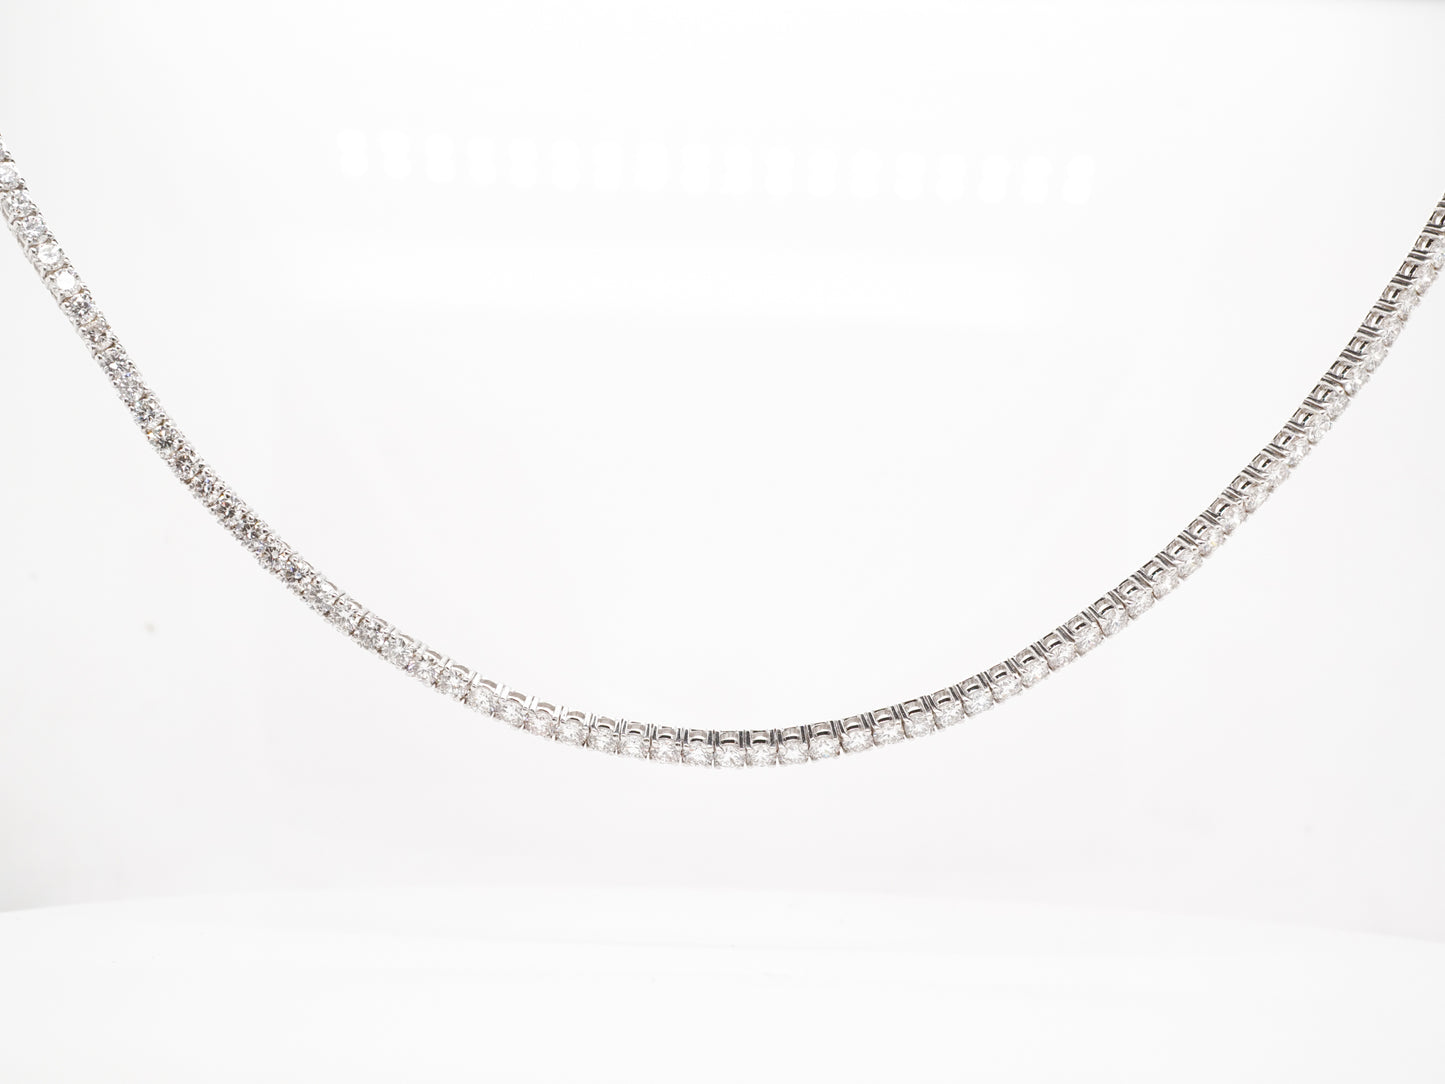 10.14 Carat Diamond Tennis Necklace in 14K White Gold